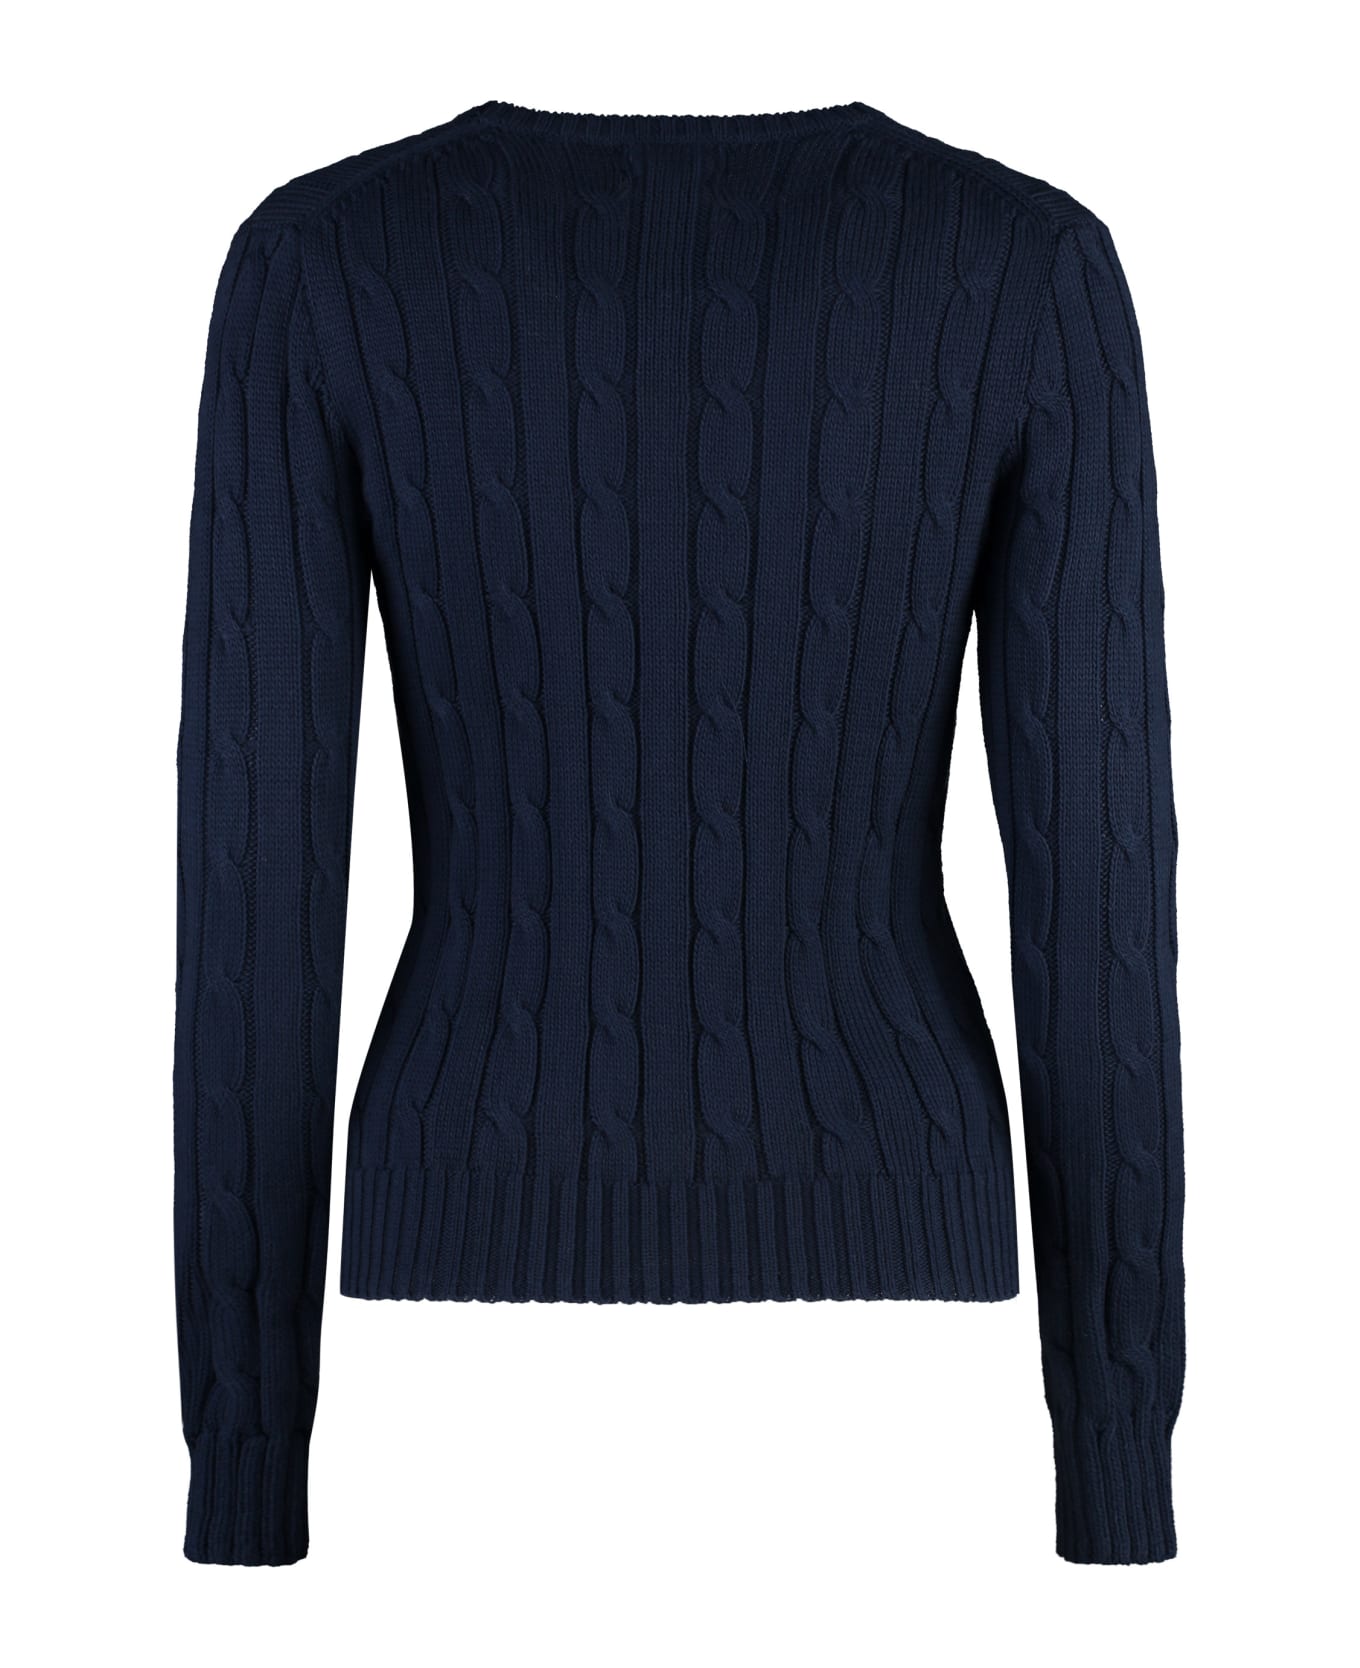 Ralph Lauren Cable Knit Sweater - blue ニットウェア